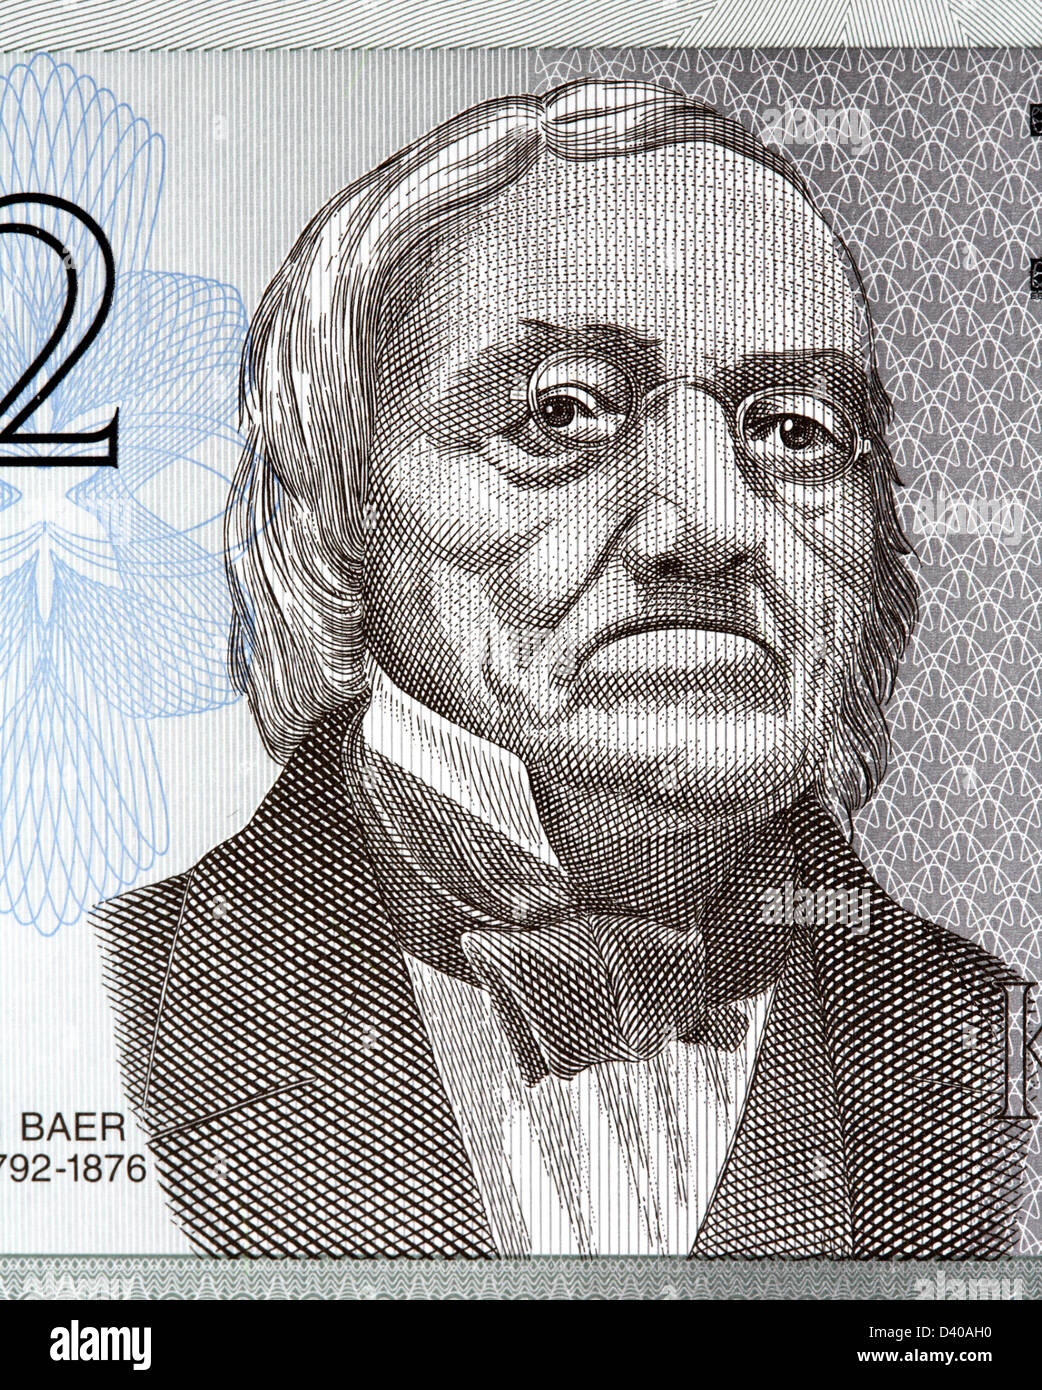 Portrait of K. E. von Baer from 2 Krooni banknote, Estonia, 1992 Stock Photo